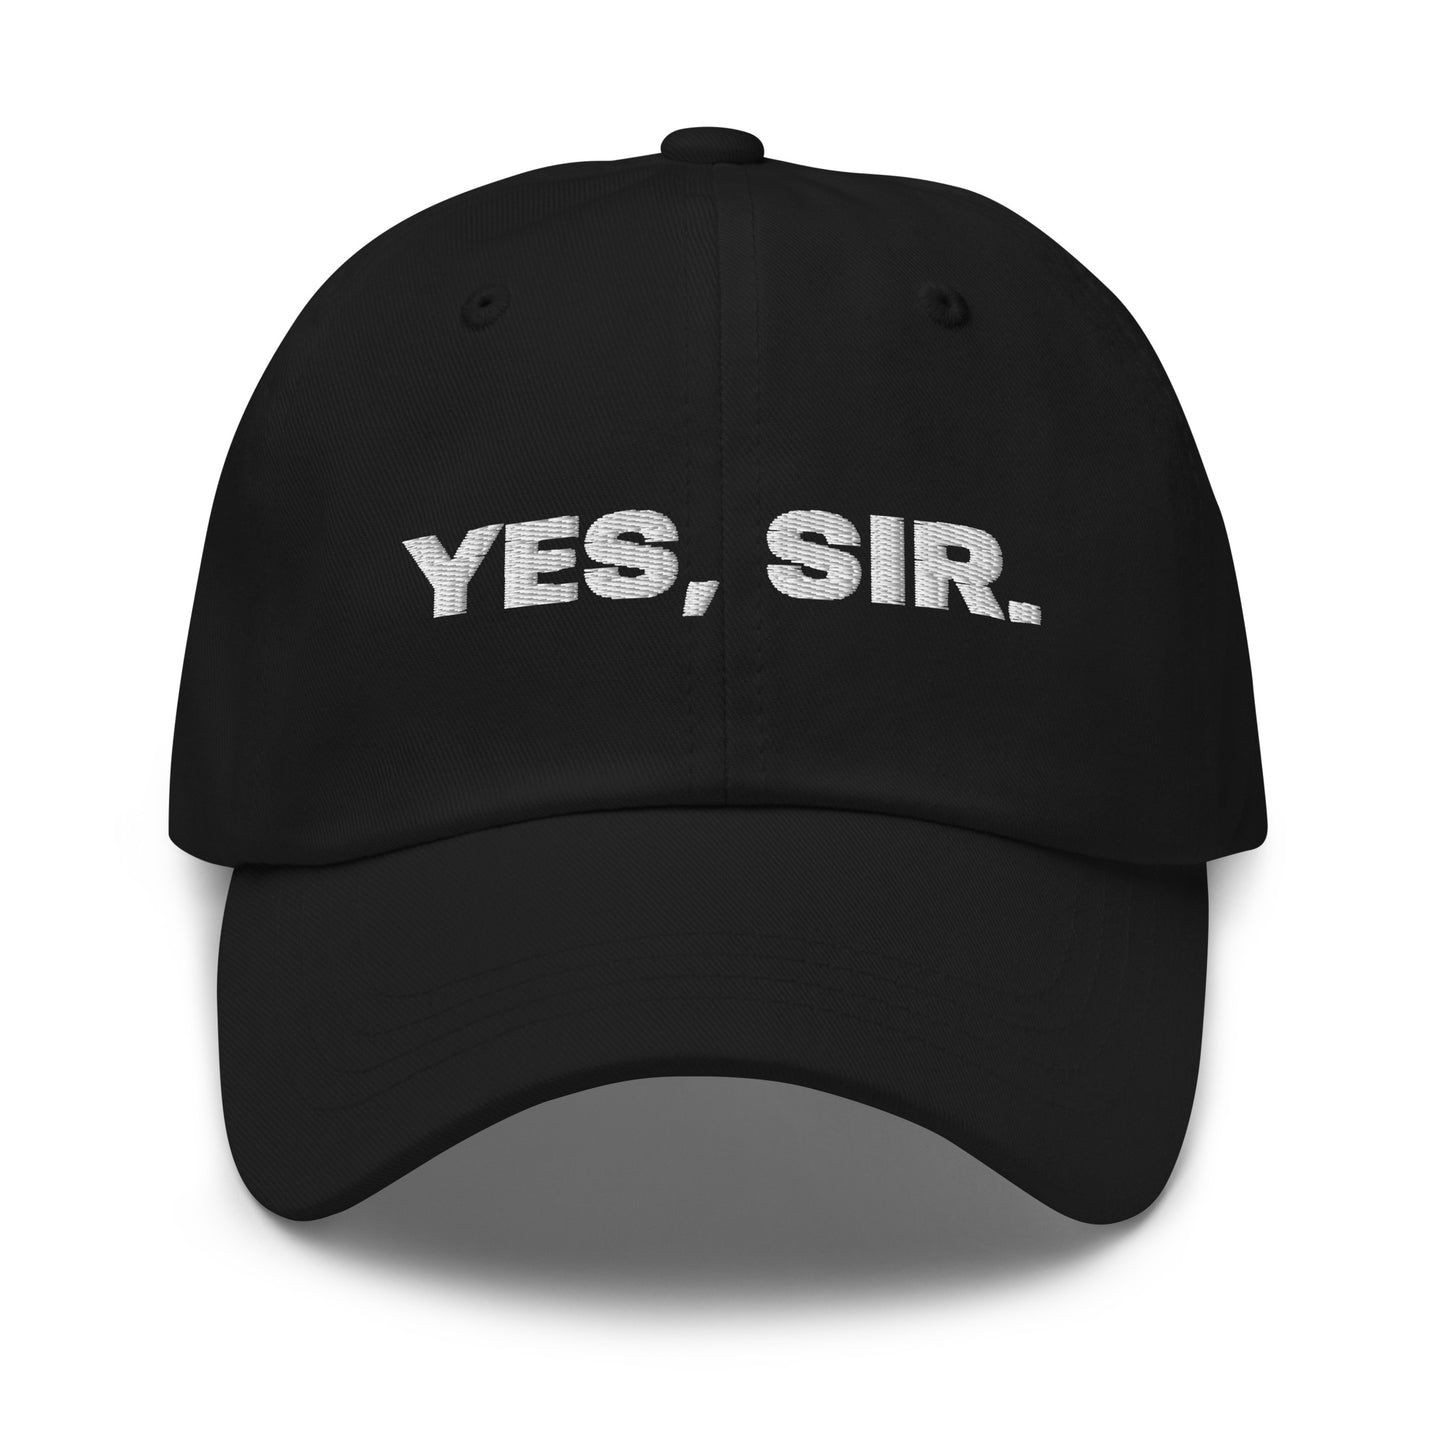 Yes, Sir. Hat